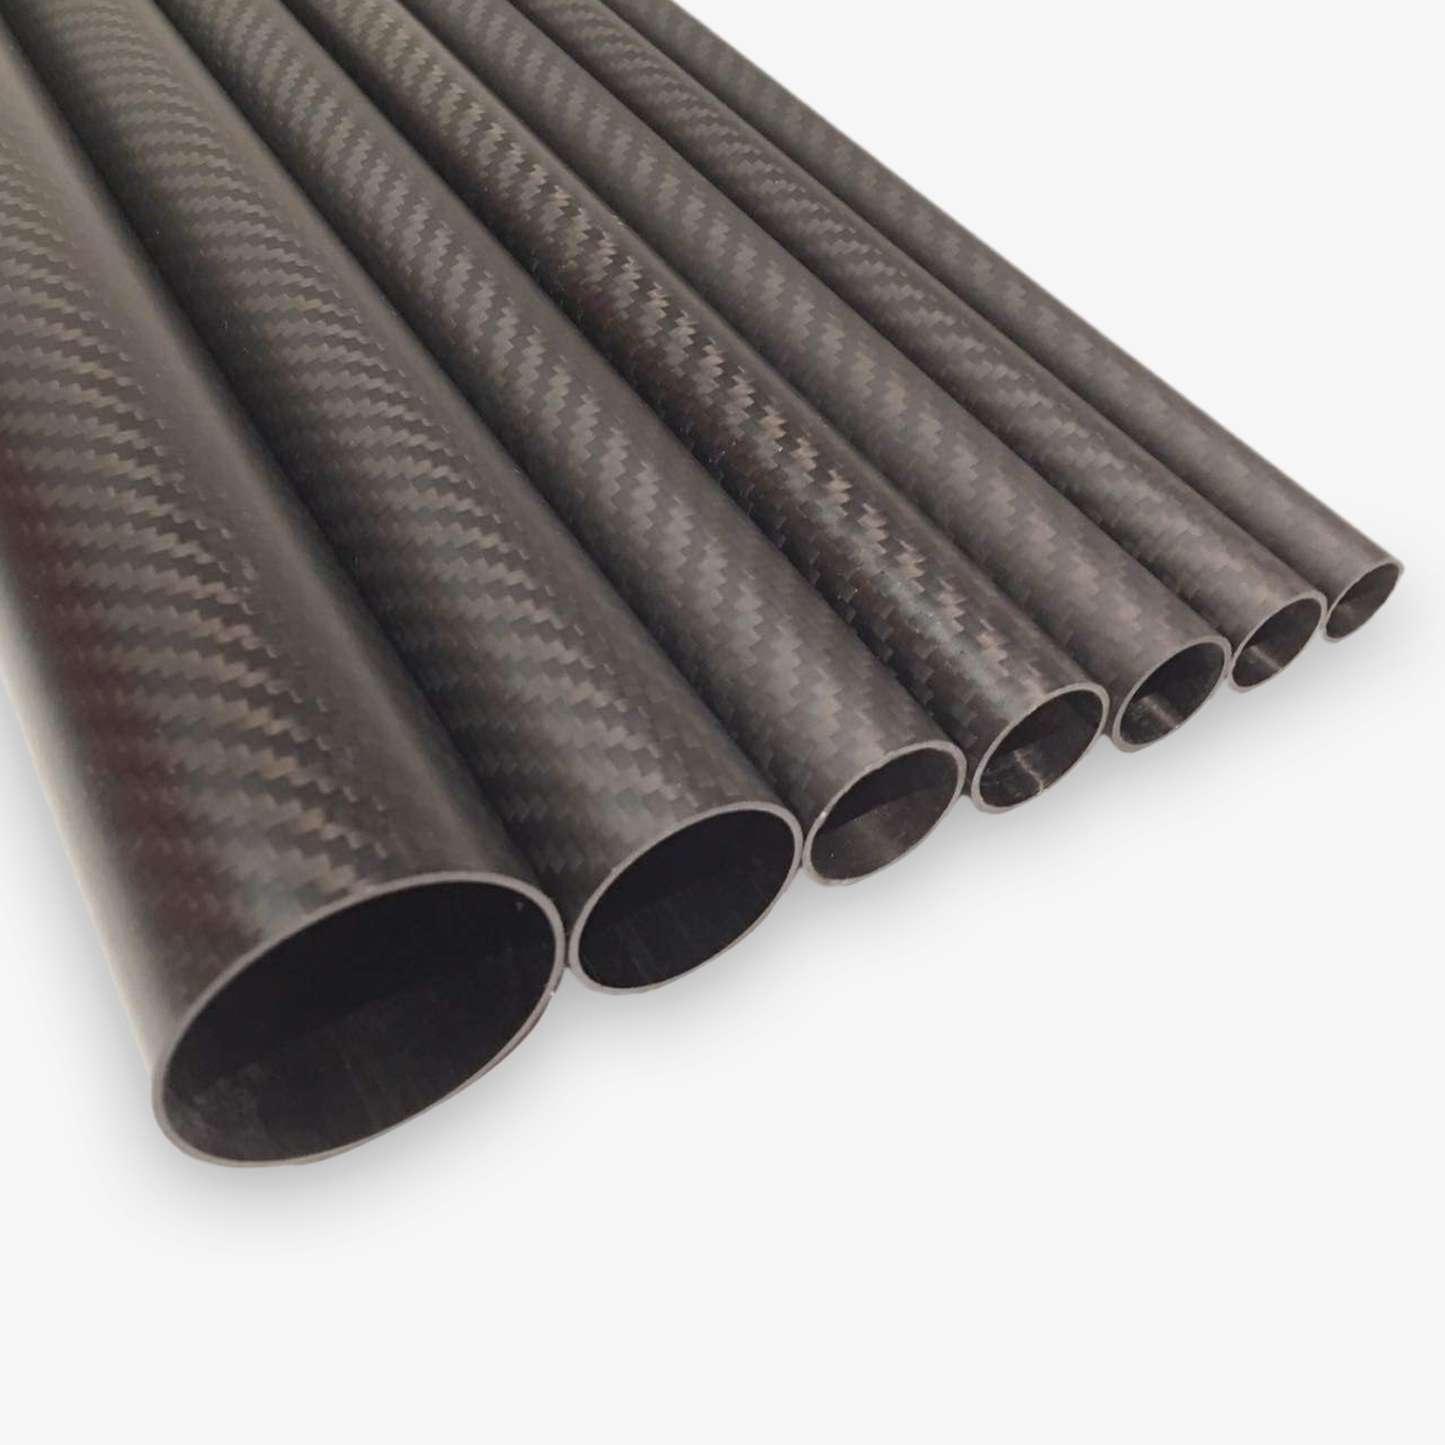 High quality 1000mm Carbon Fiber Tubes